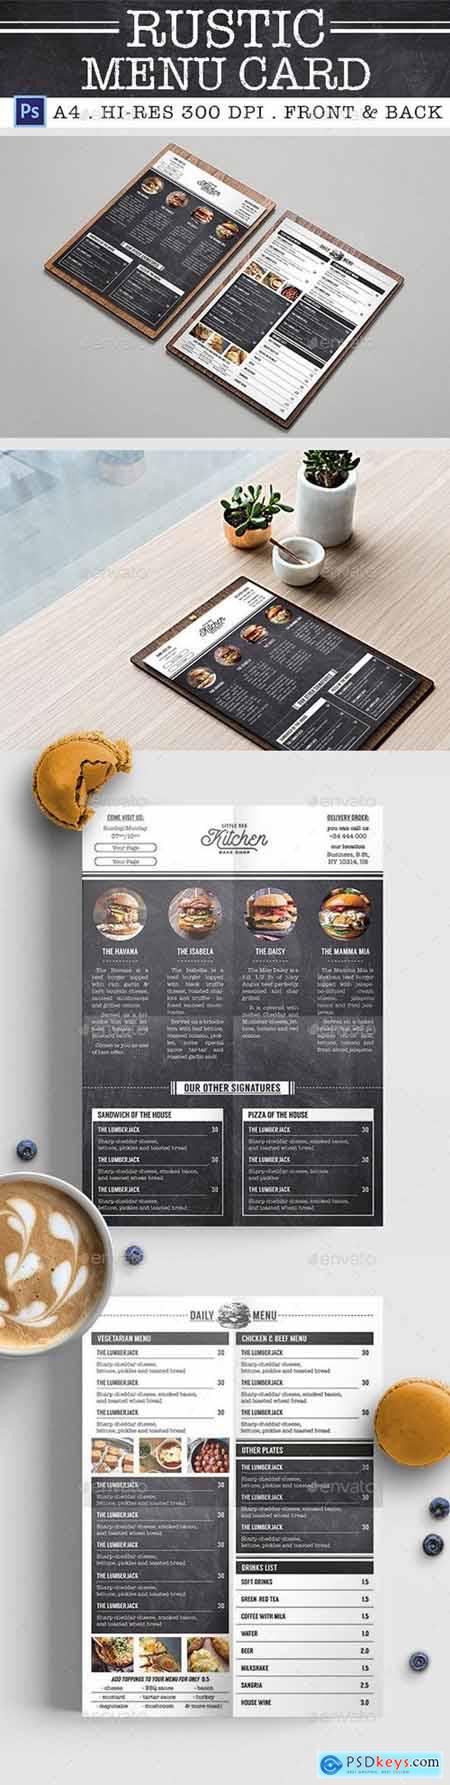 Rustic Burger Menu Card